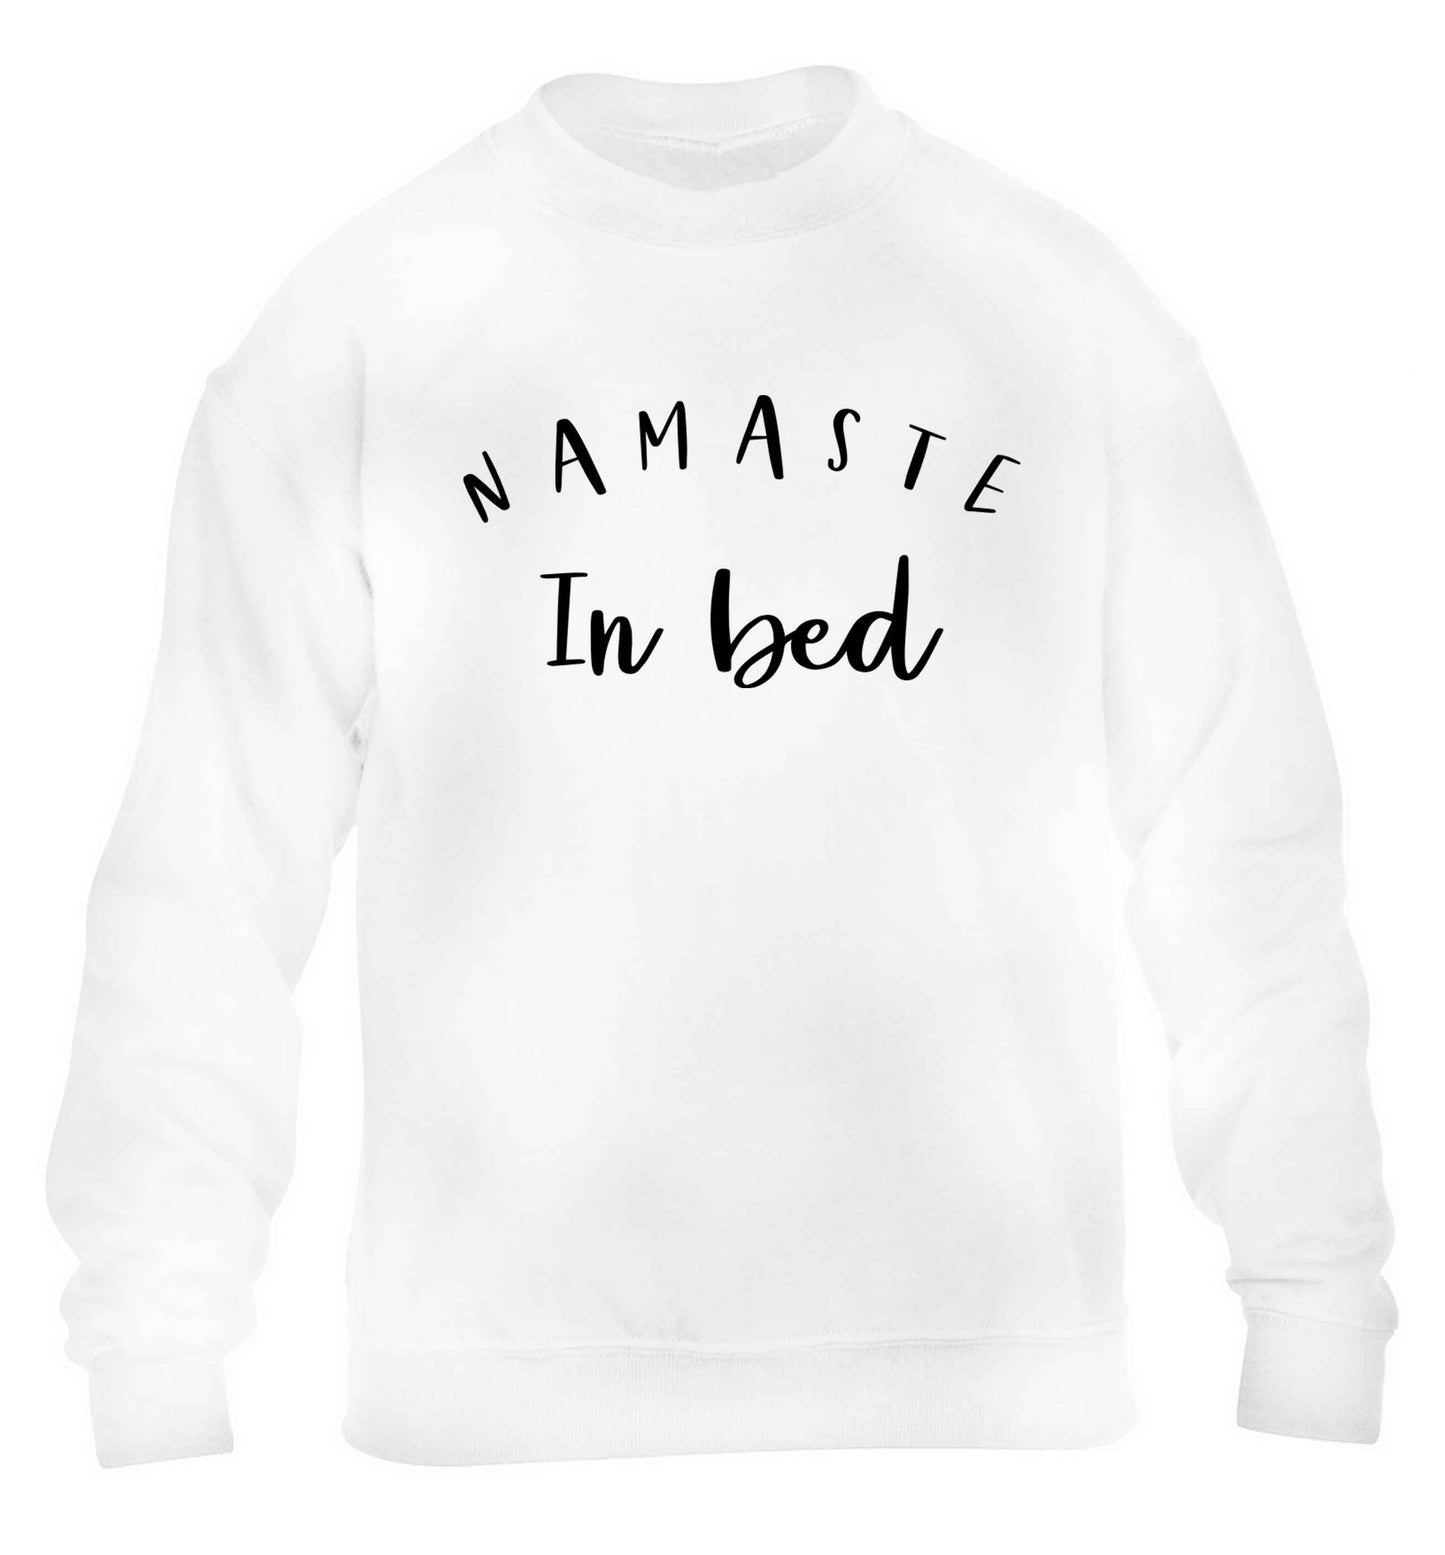 Namaste in bed children's white sweater 12-13 Years